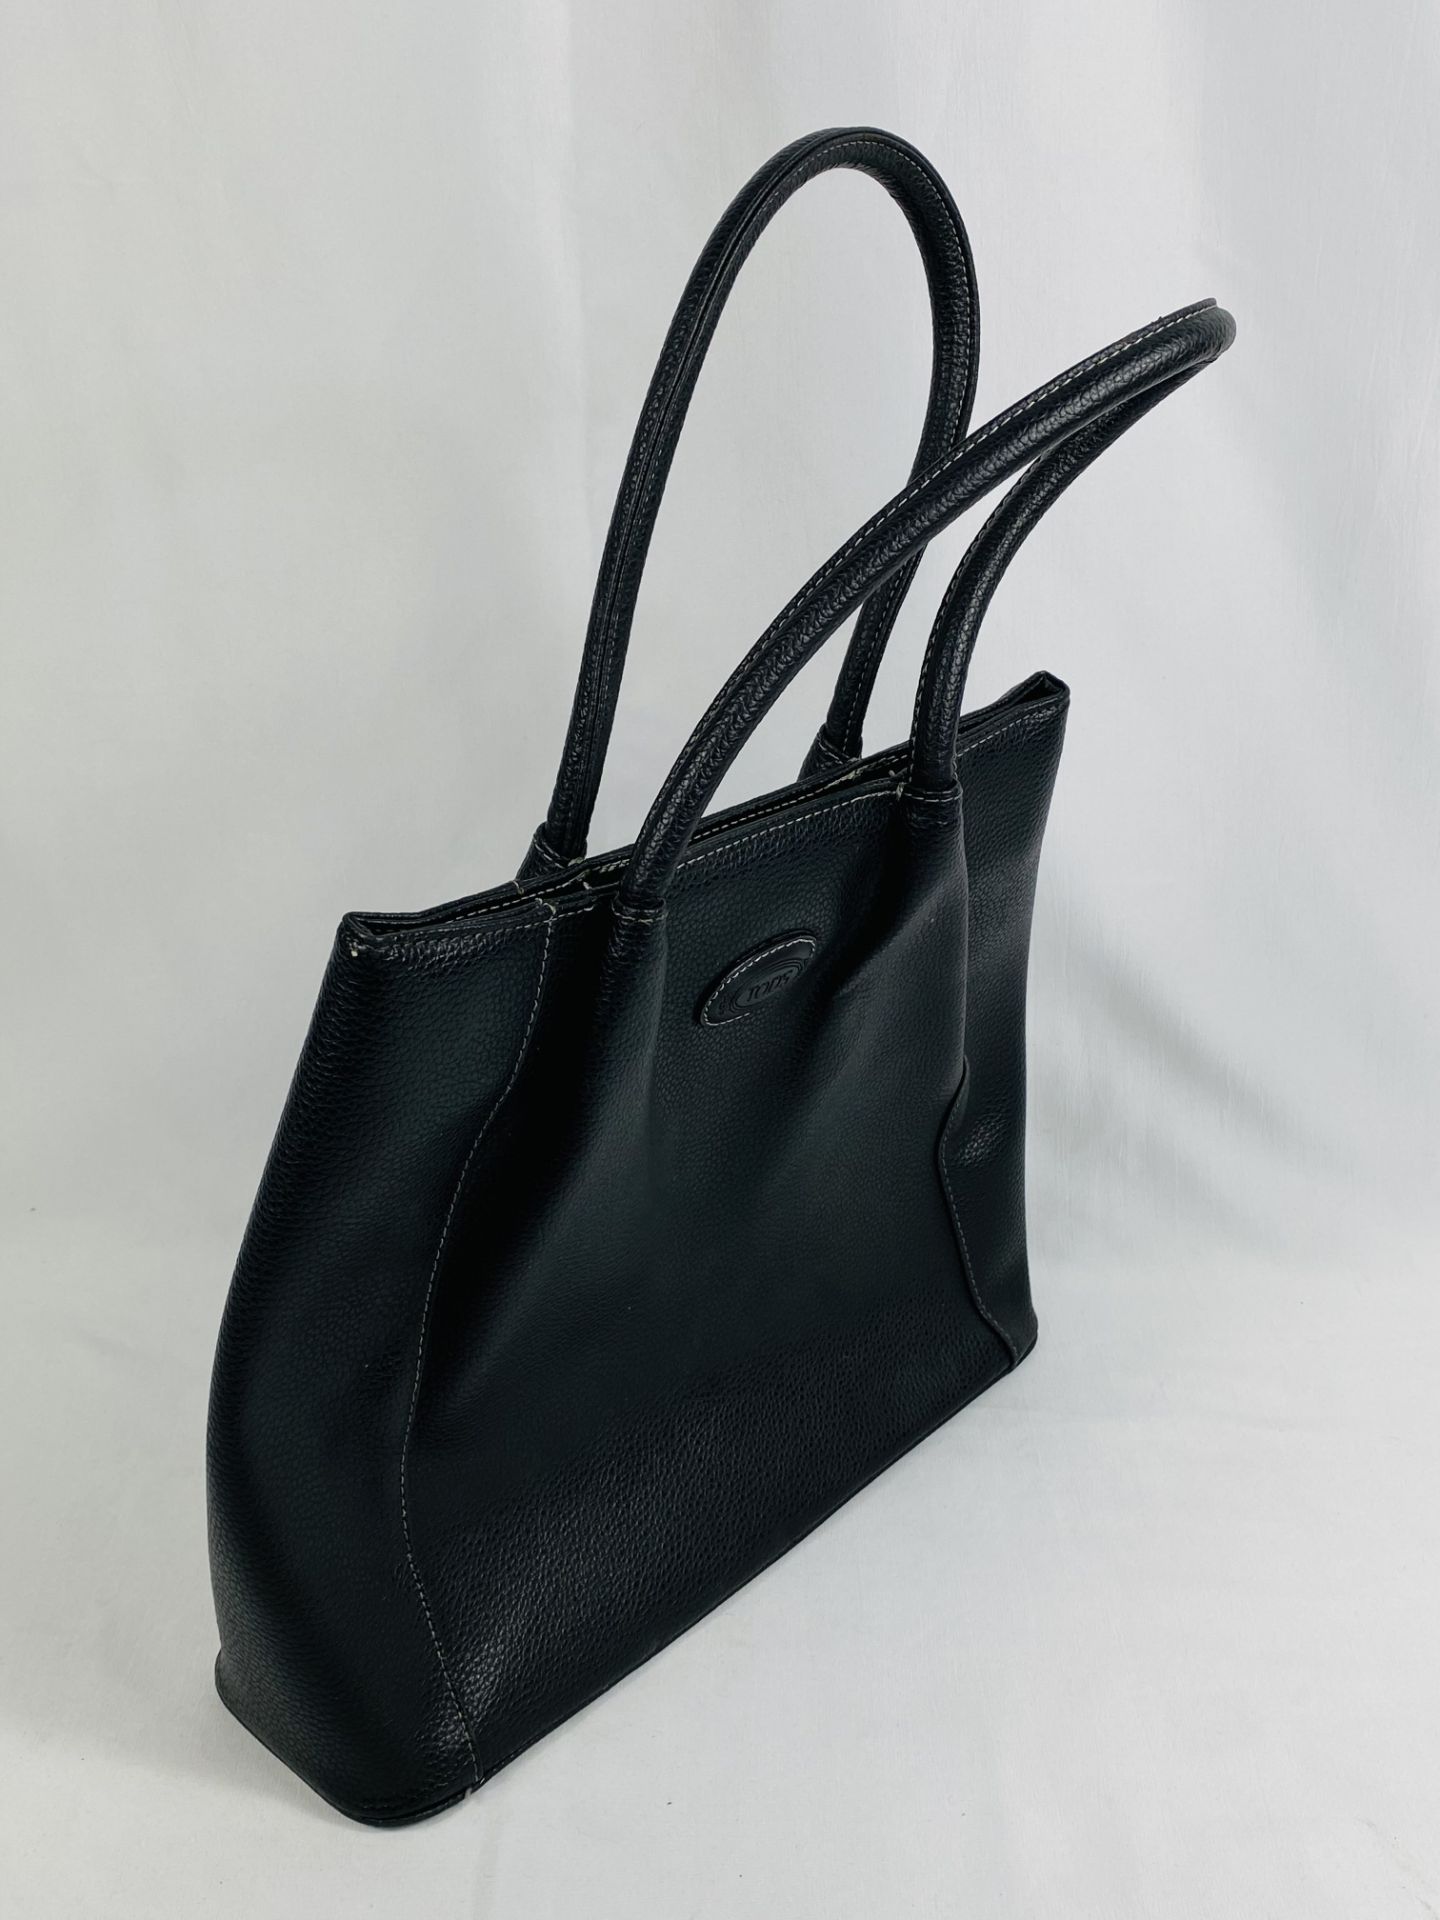 Tod's black leather shopper bag - Image 3 of 3